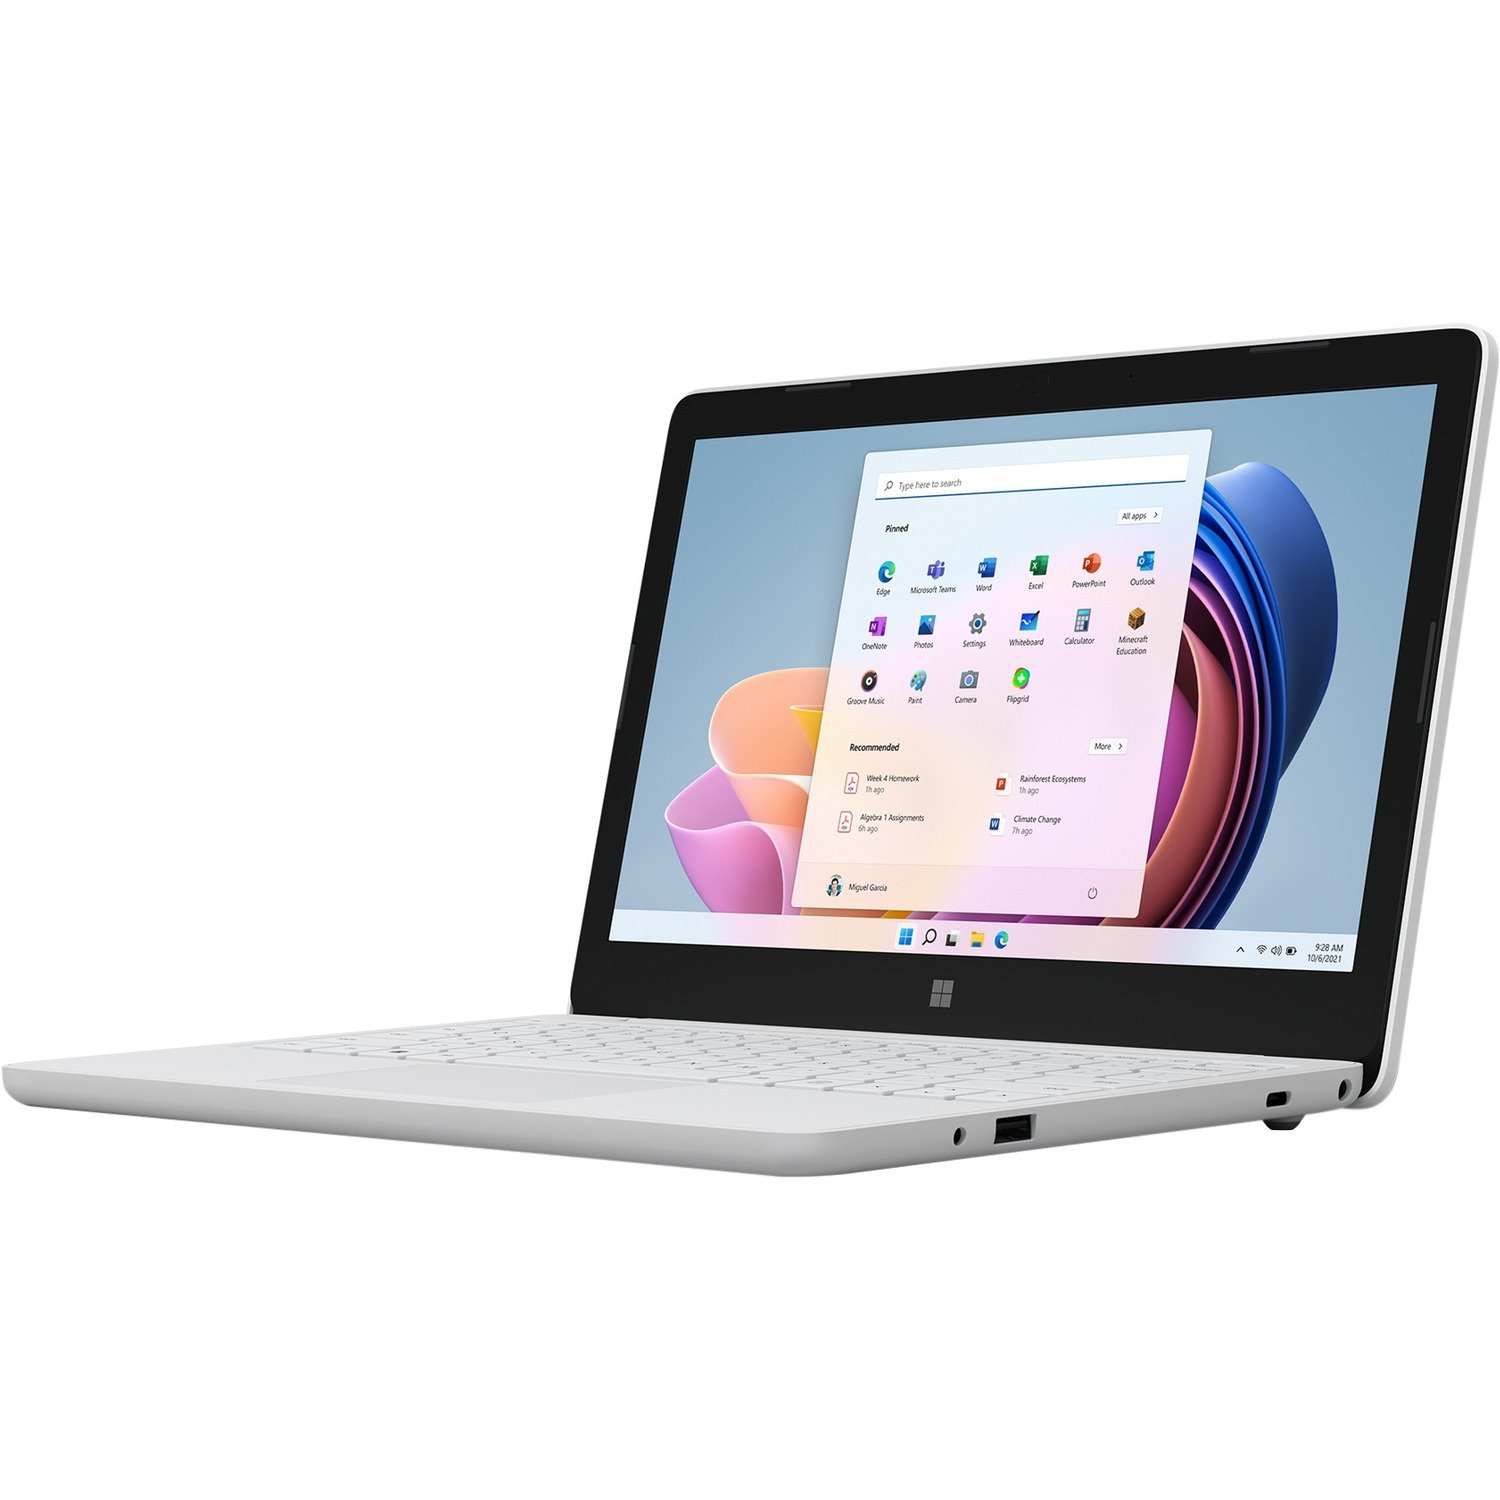 Microsoft Surface Laptop SE 29.5 cm (11.6") Touchscreen Netbook - 2880 x 1920 - Intel Celeron Quad-core (4 Core) - 128 GB SSD - Glacier